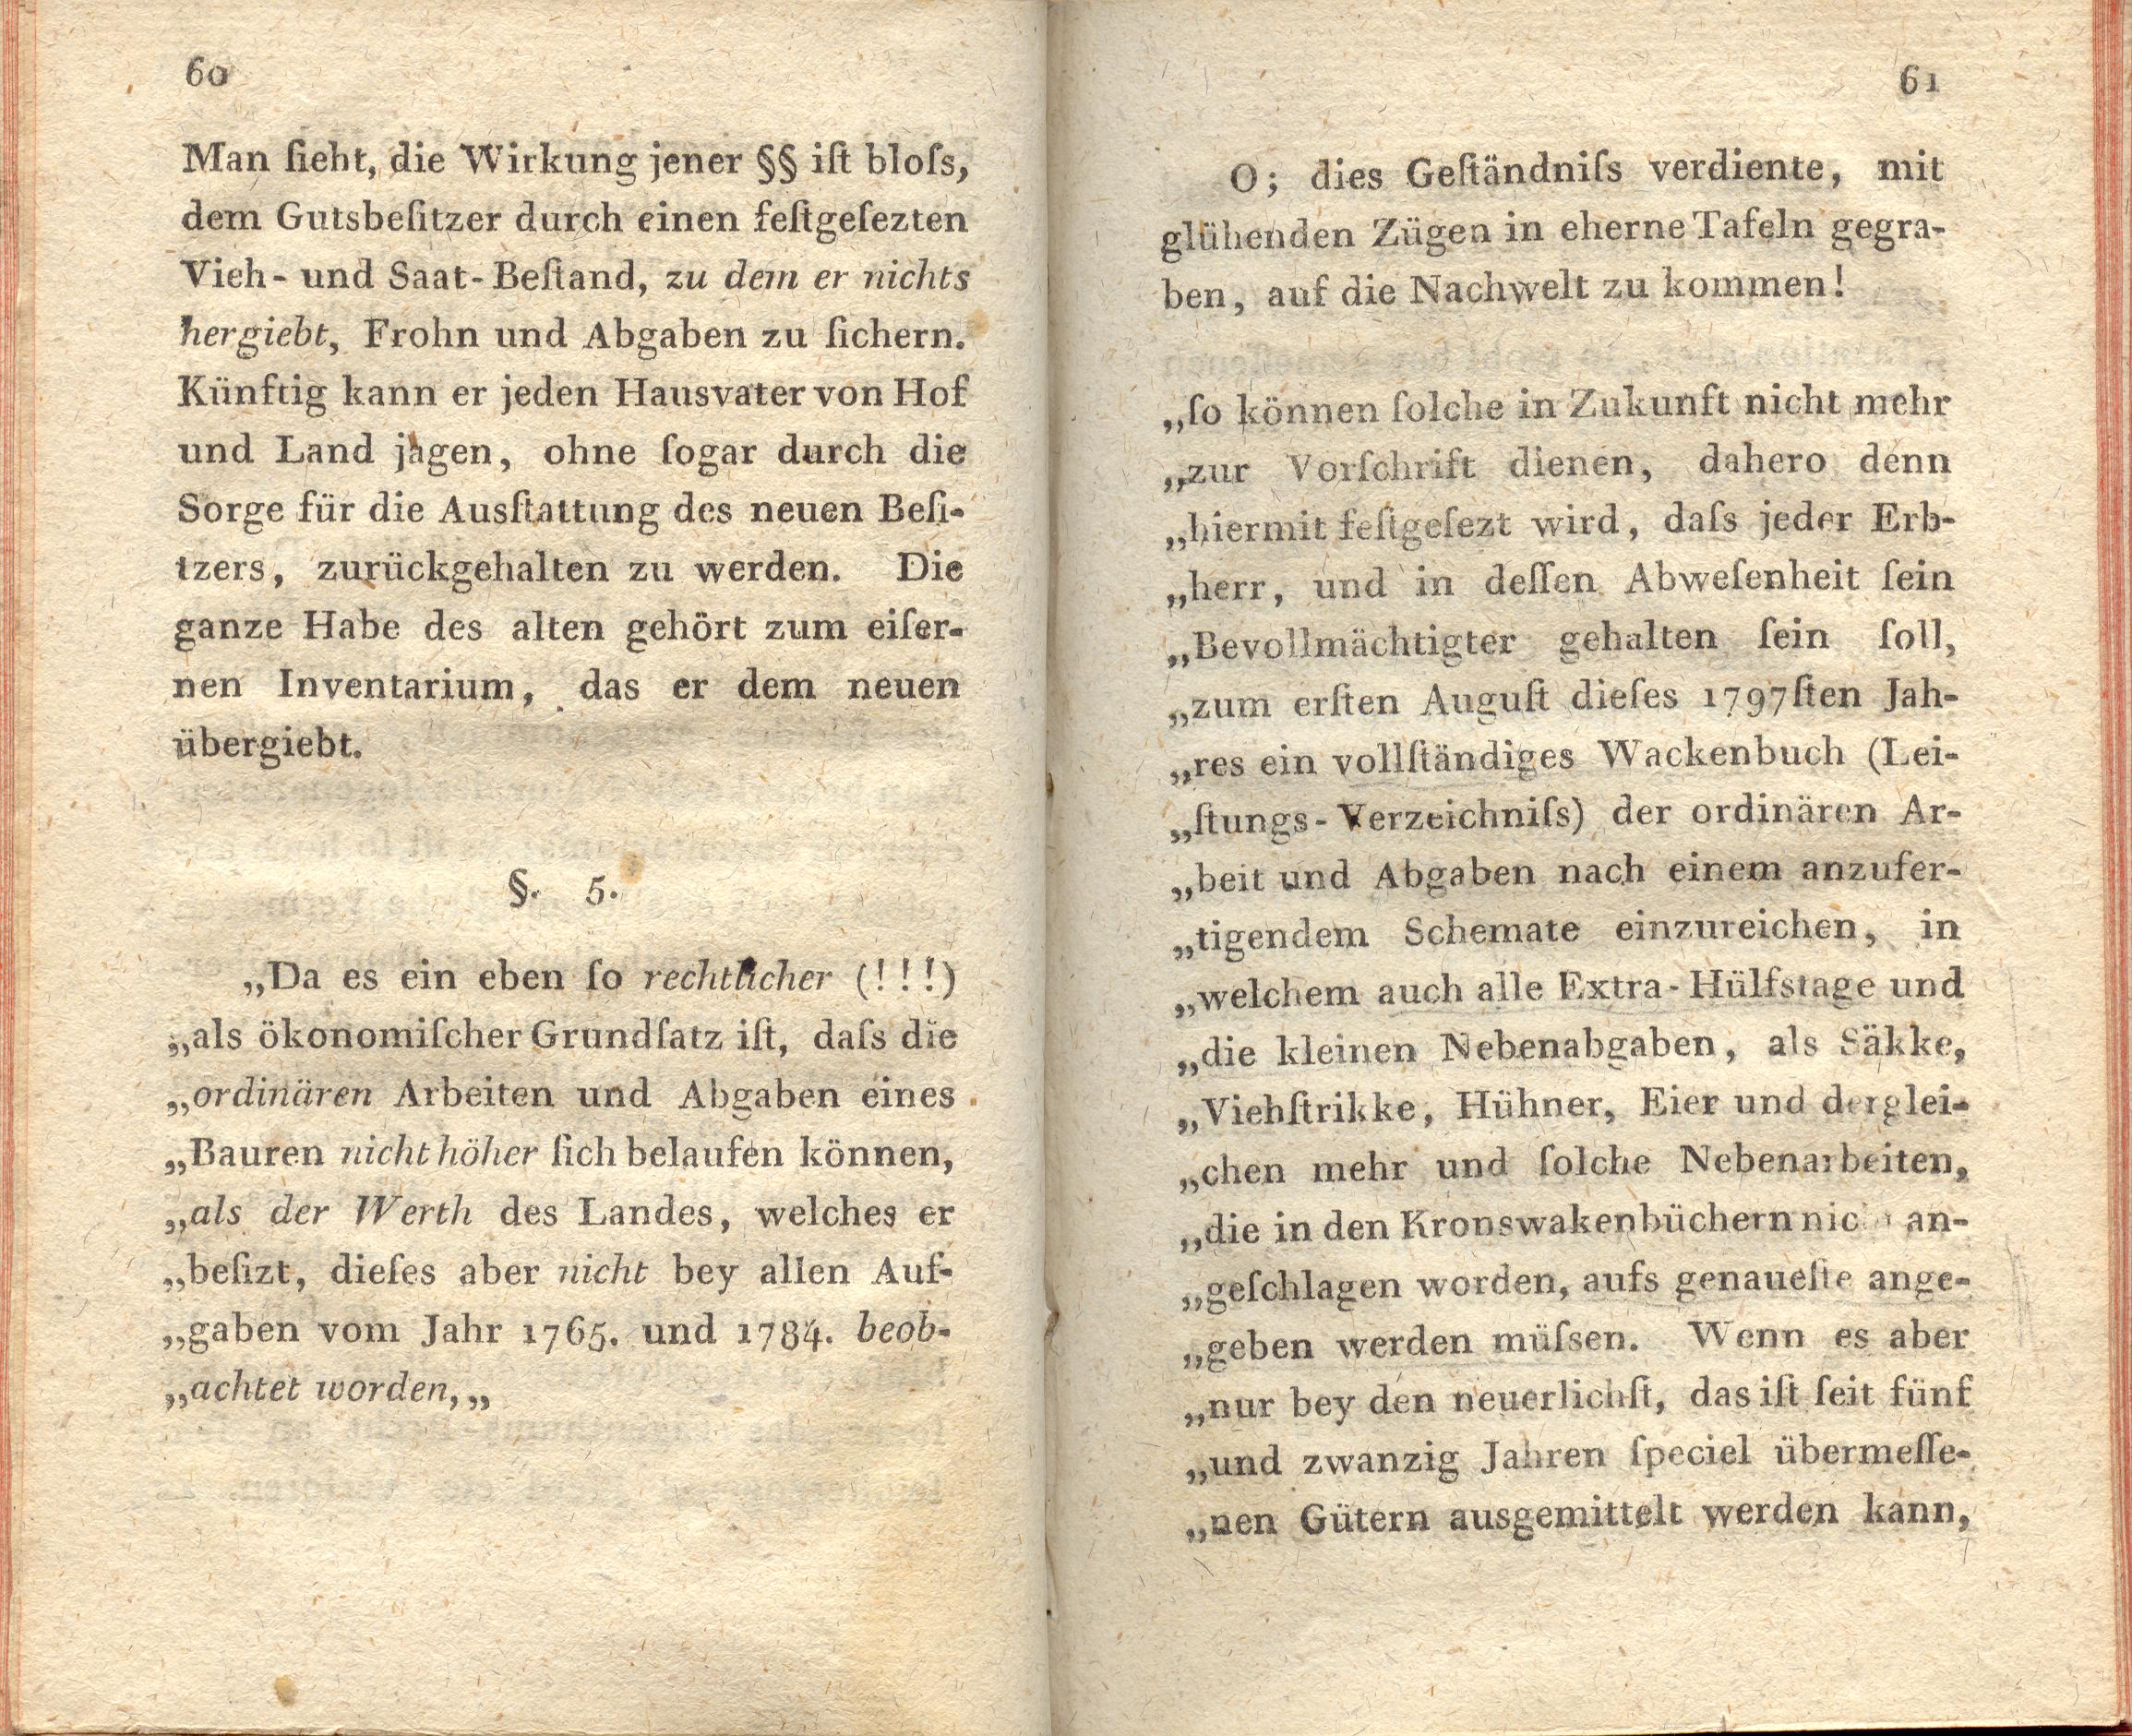 Supplement zu den Letten (1798) | 31. (60-61) Основной текст